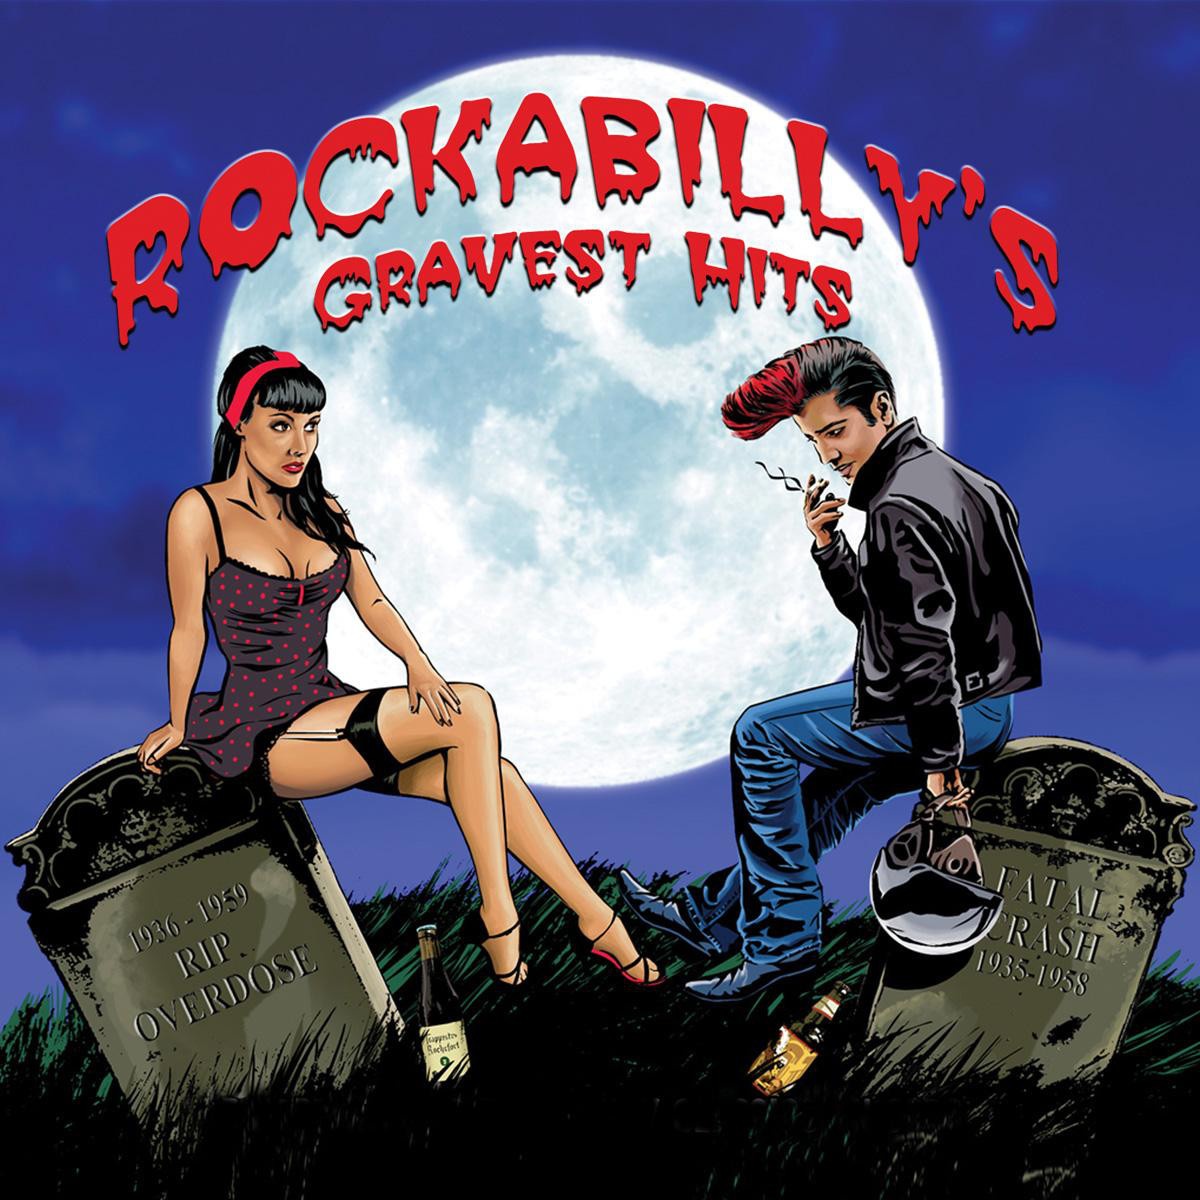 Rockabilly's Gravest Hits